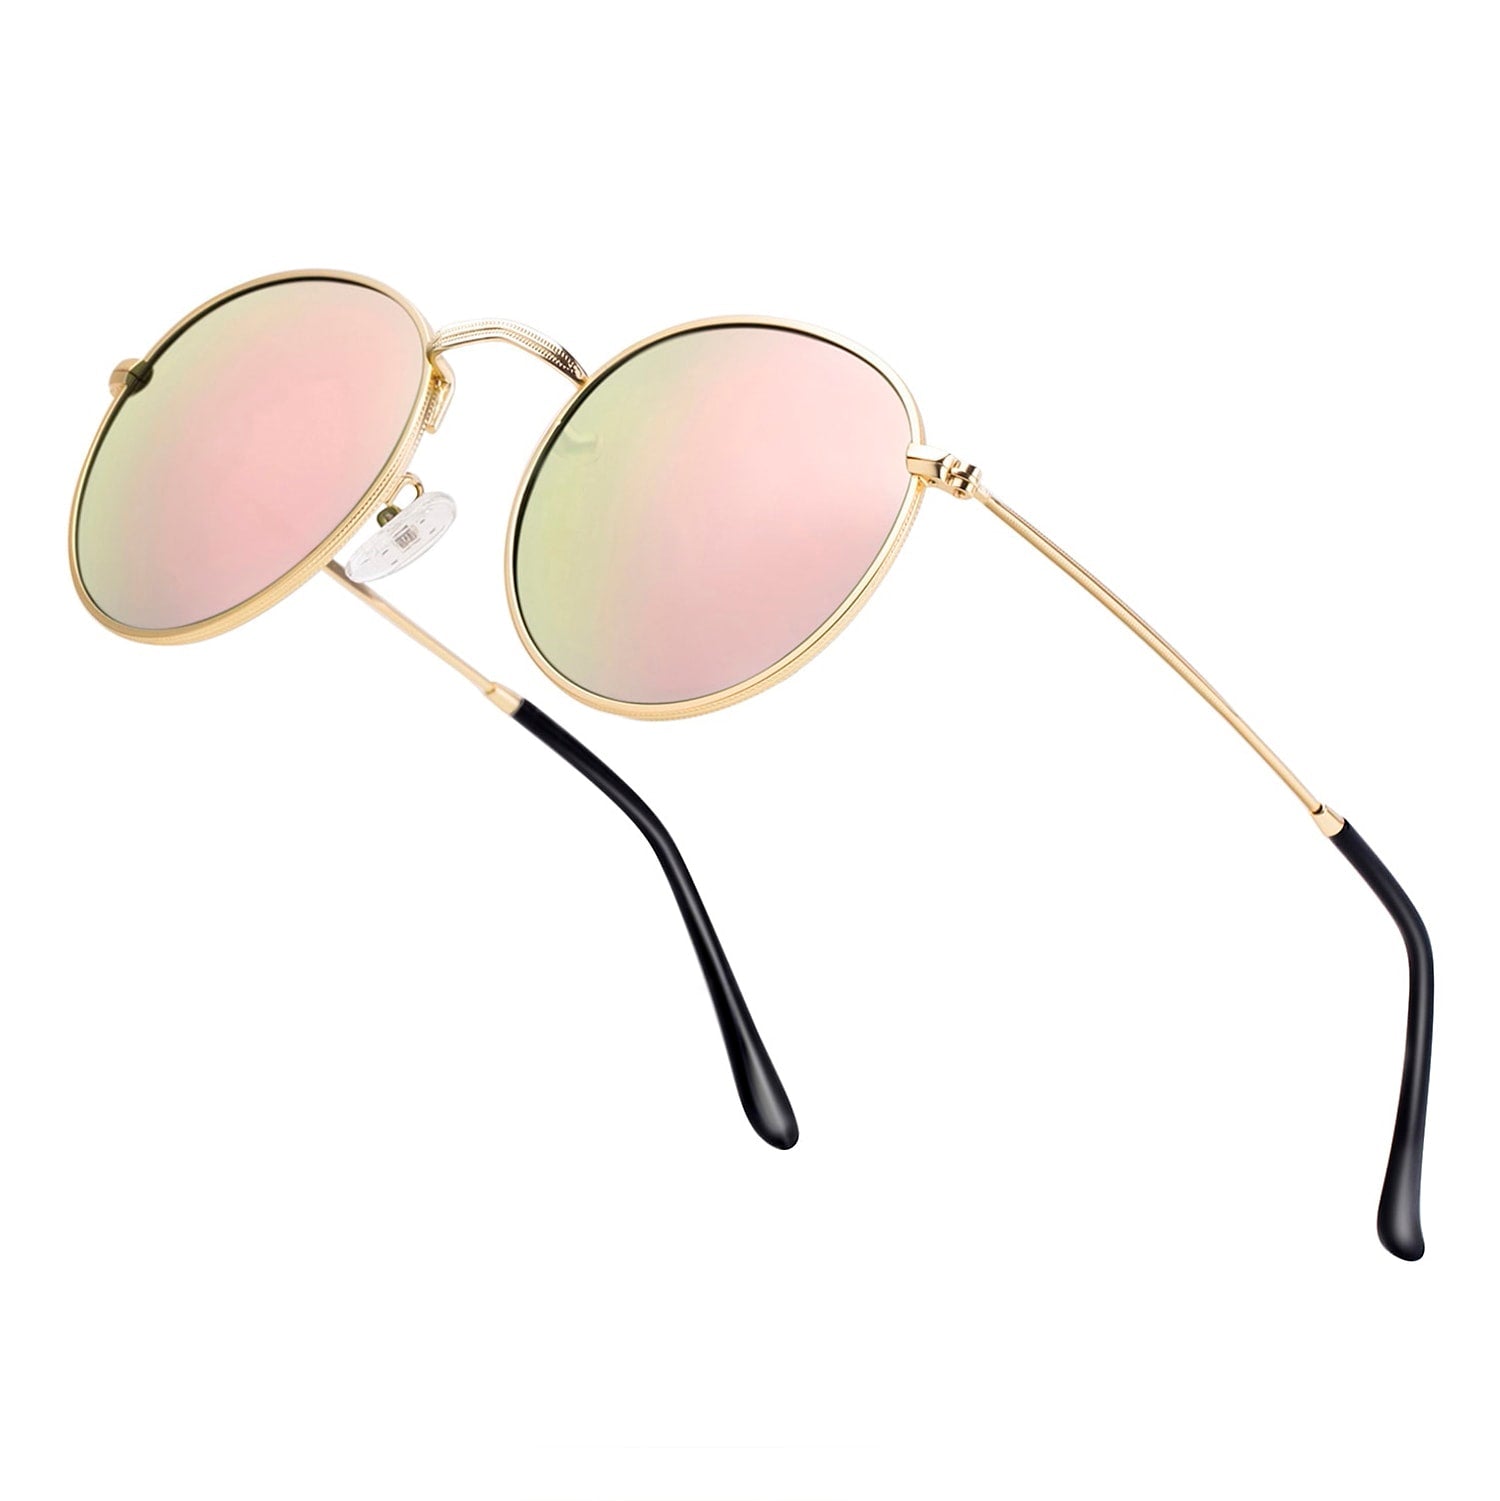 Onrtry Men's Small Round Polarized Sunglasses